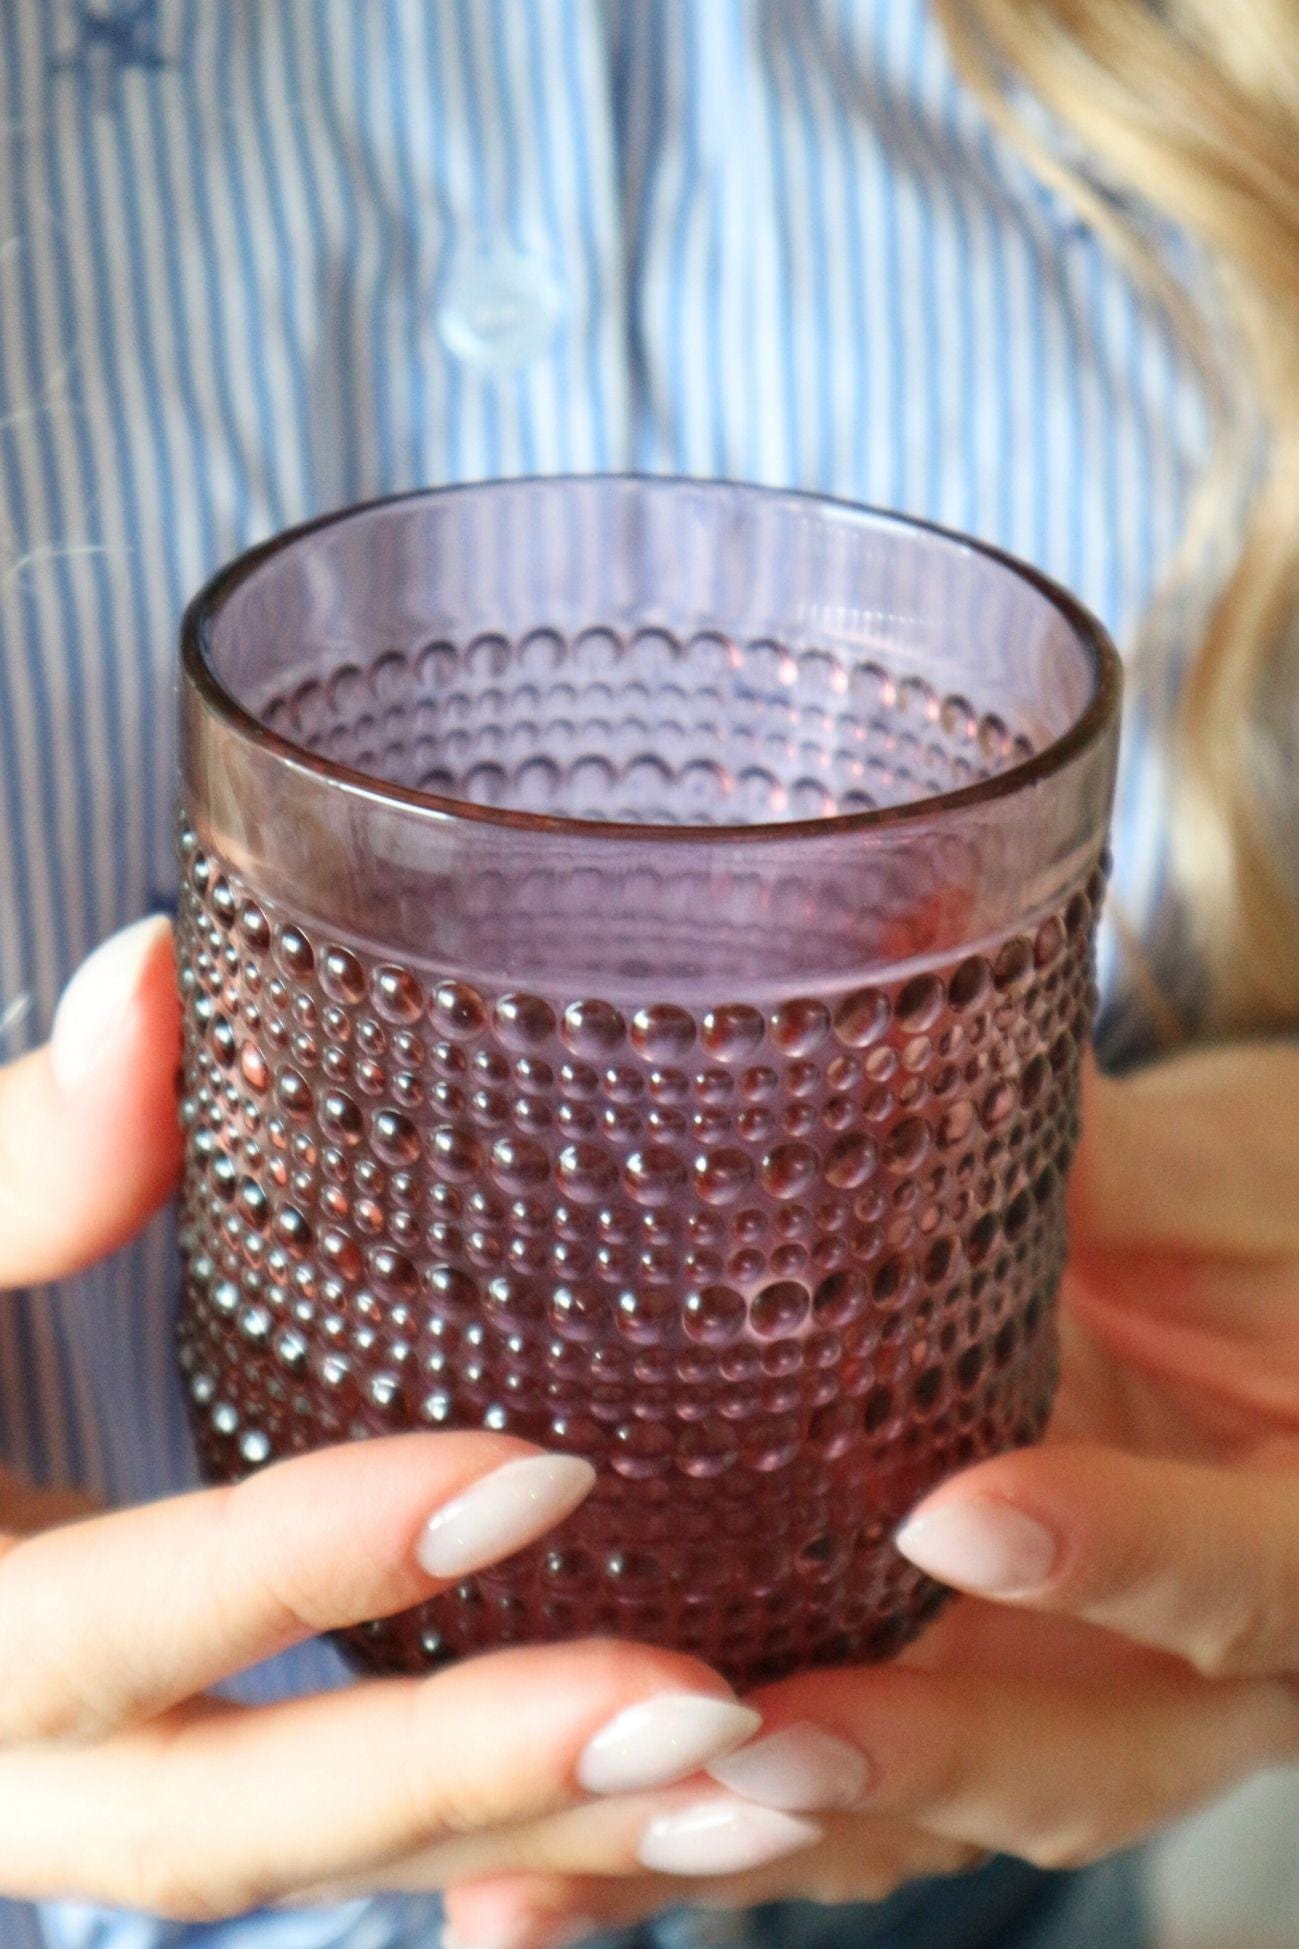 Item International Ermes Ermes - Bicchiere di vetro rosa 240ml | Item International